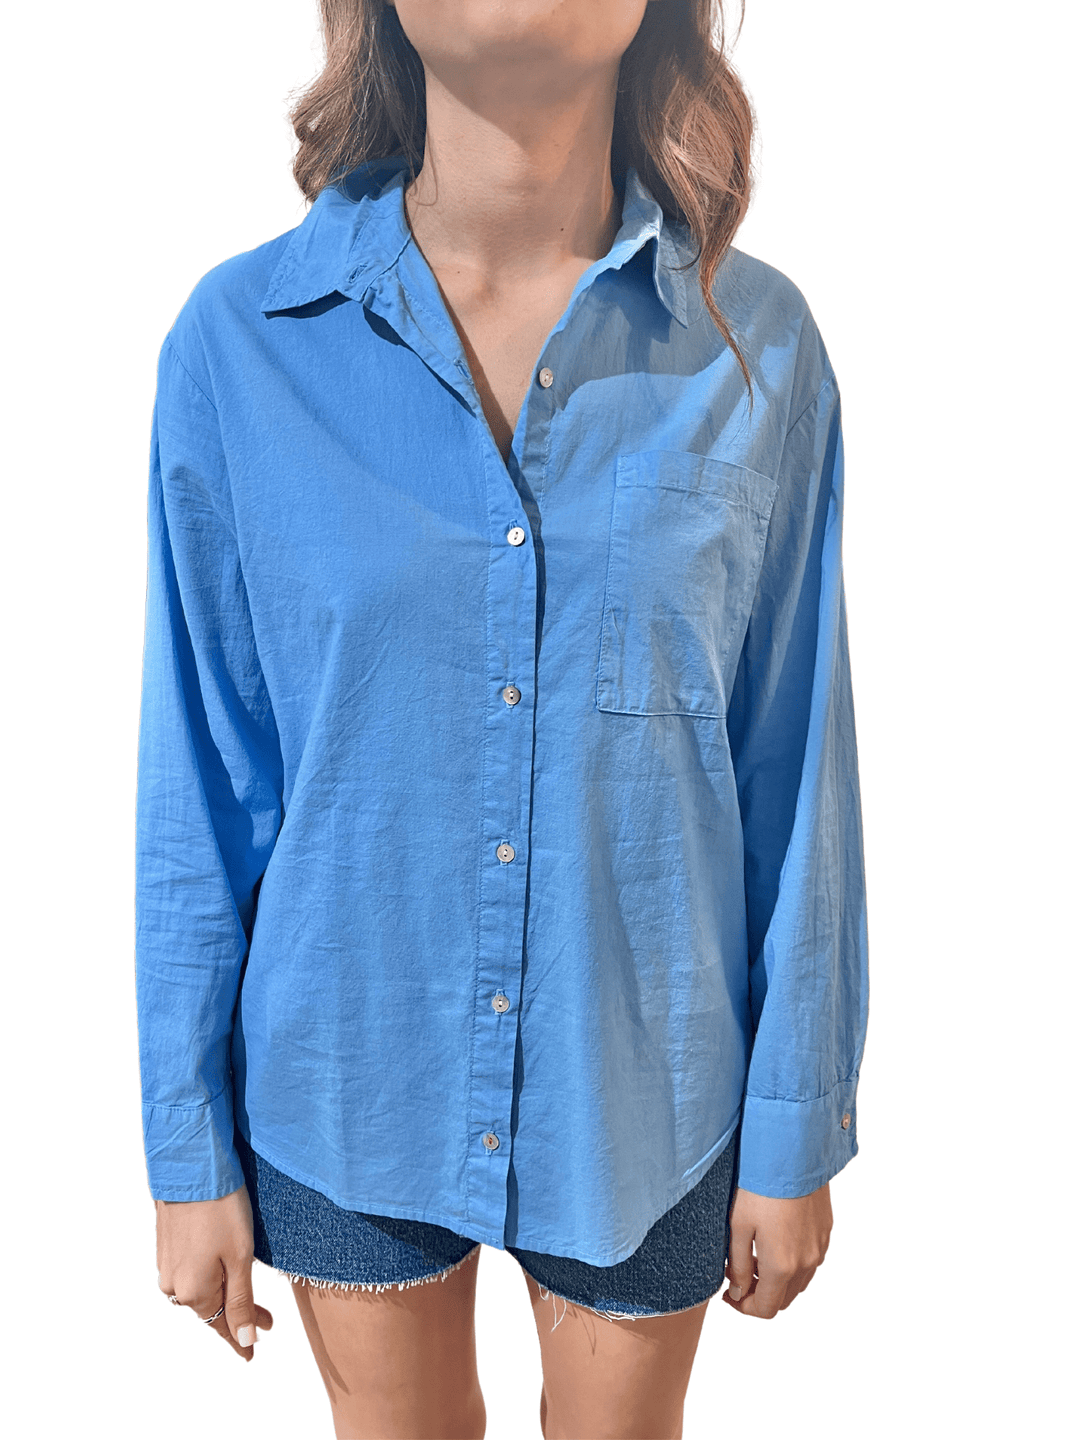 Sundry Classic Shirt - Capri by Sunset & Co.